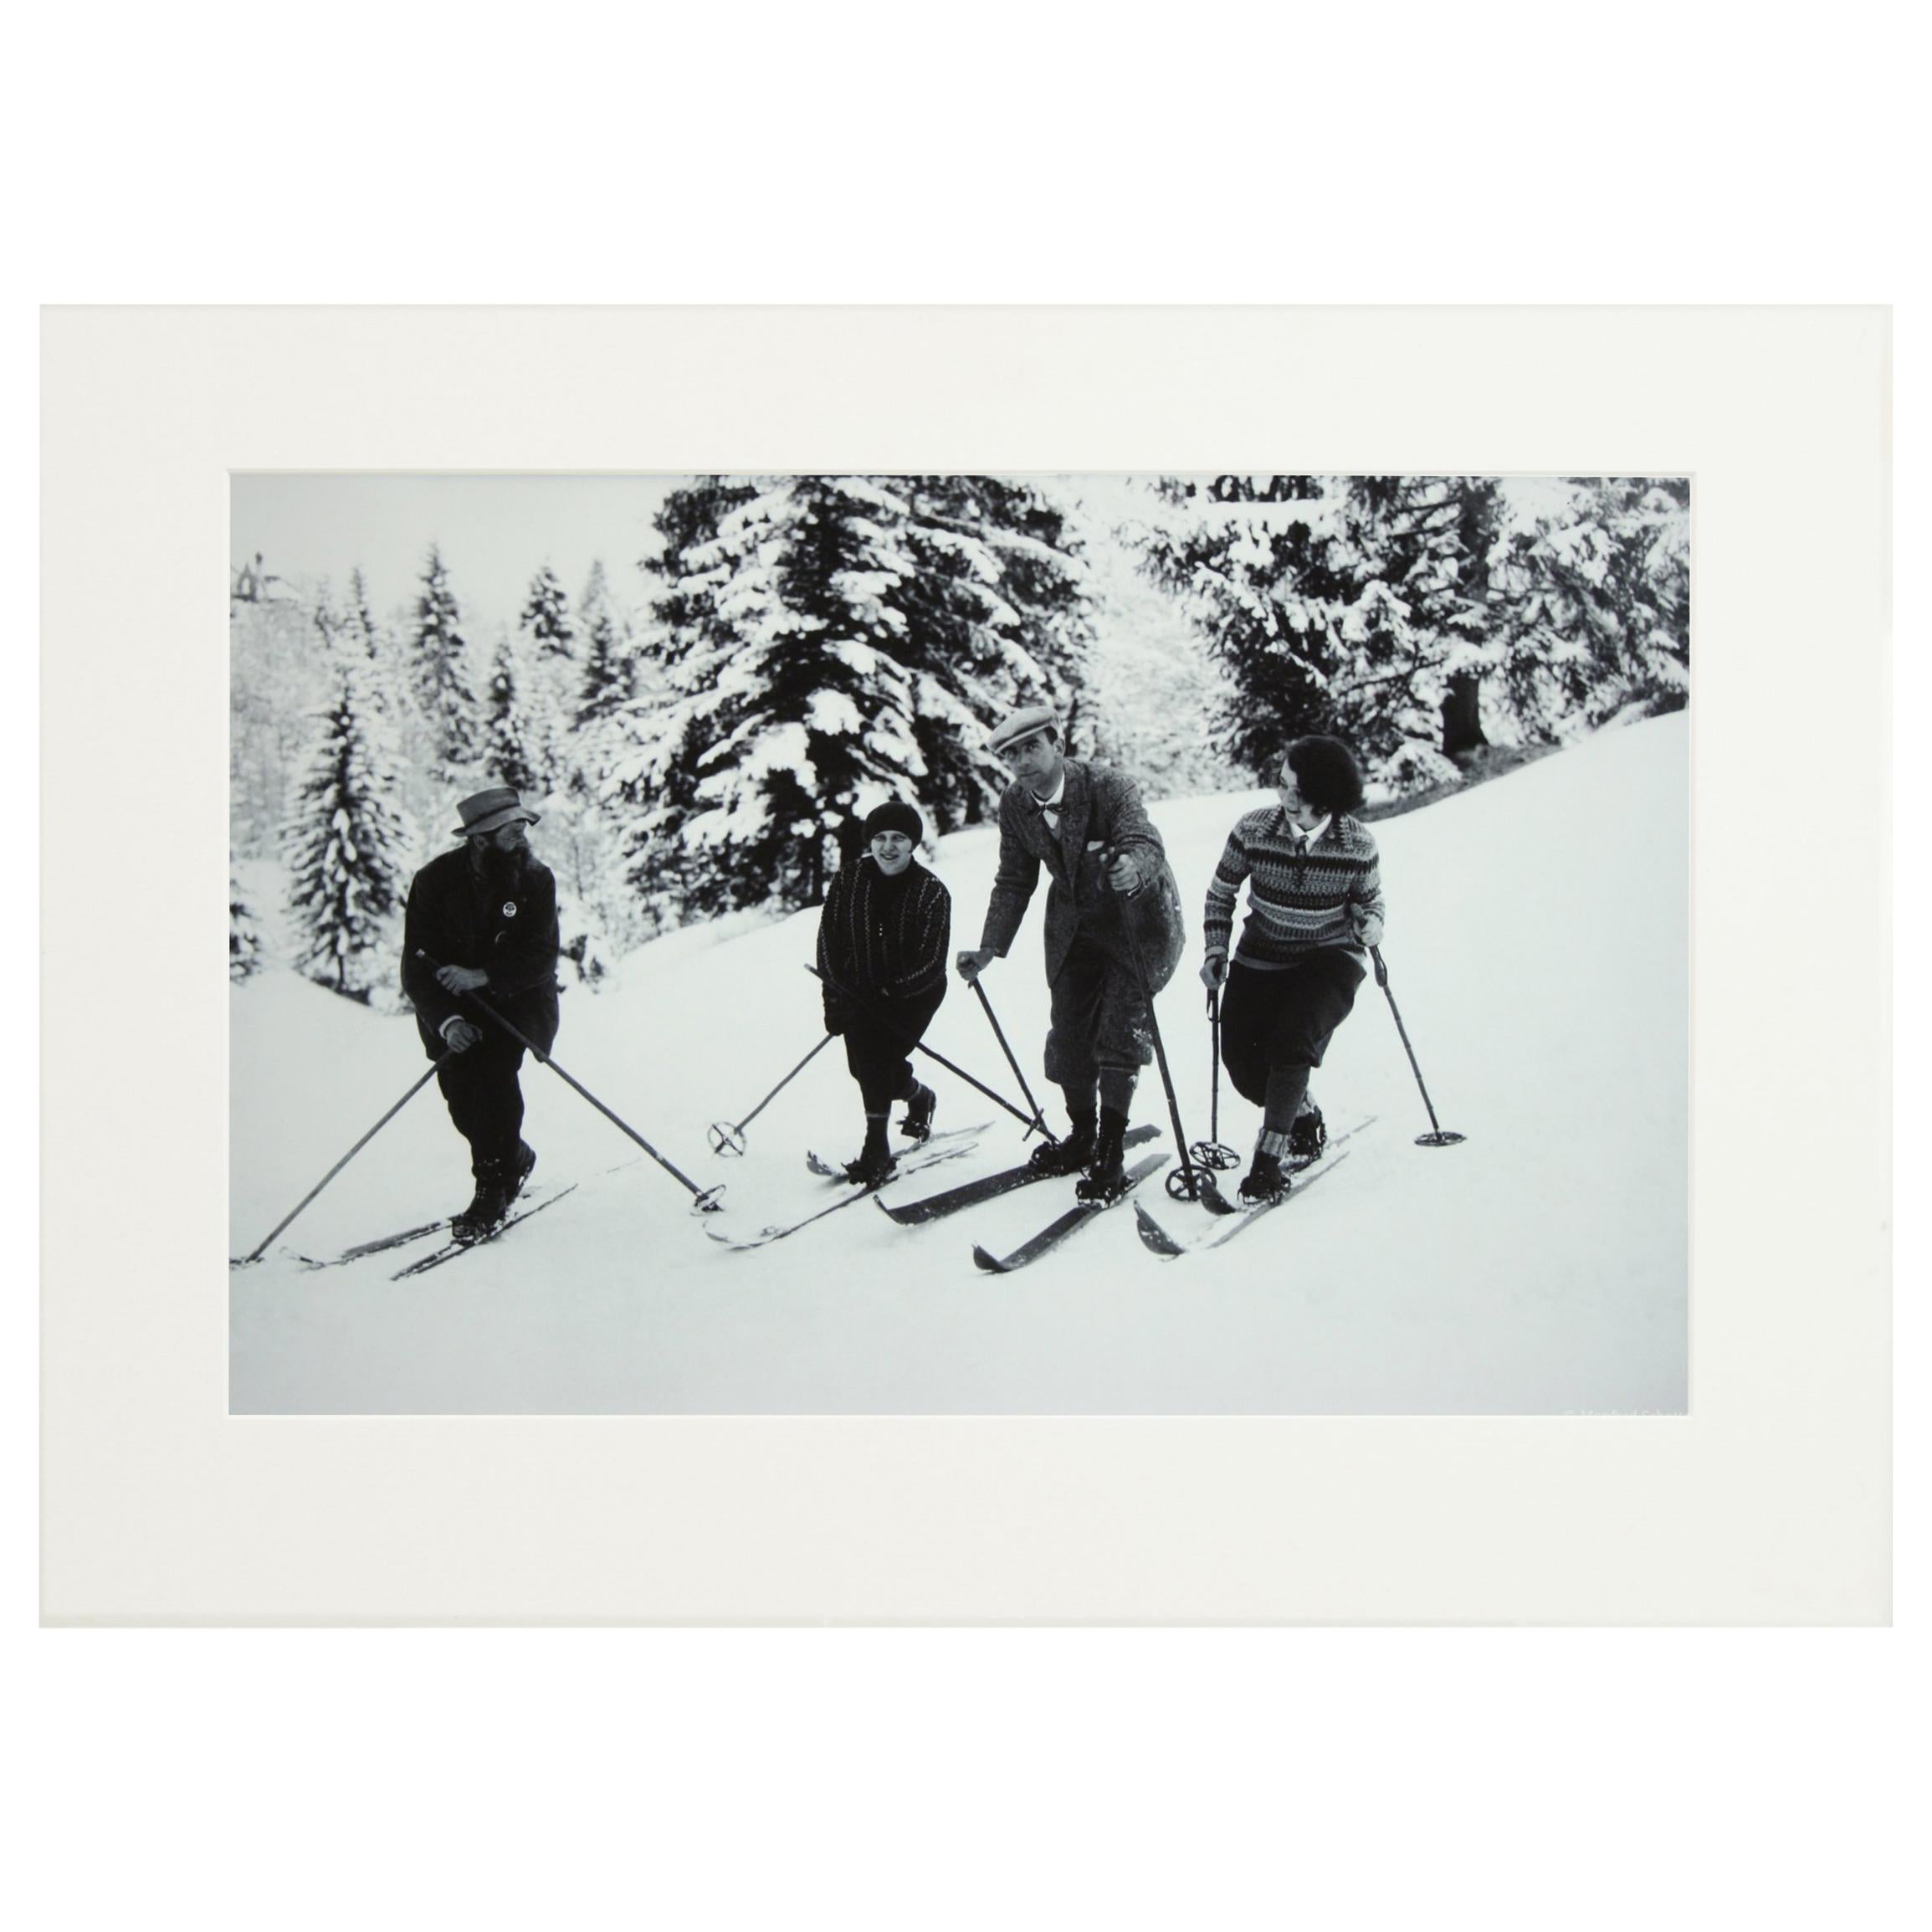 Alpine Ski Photograph, 'Bend Zie Knees', Taken from Original 1930s Photograp